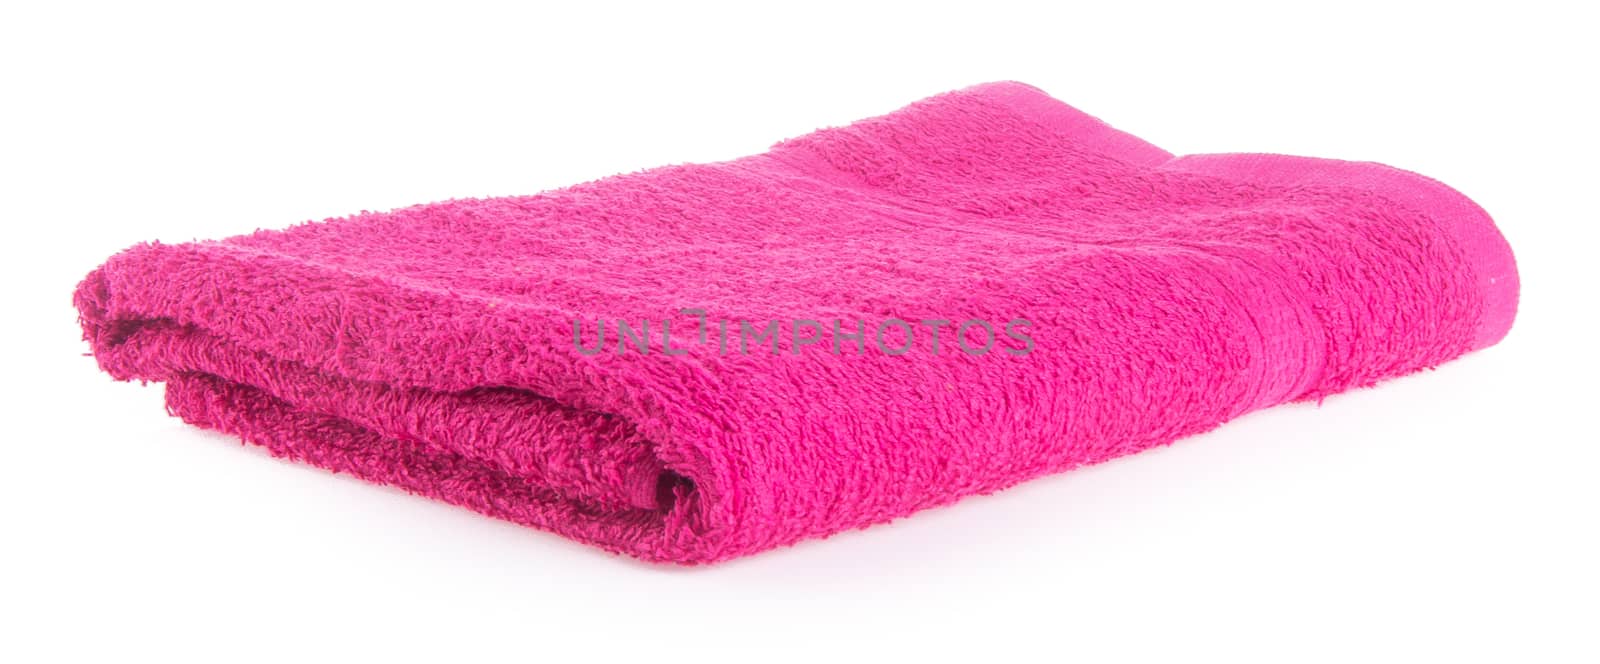 towel. towel on a background by heinteh